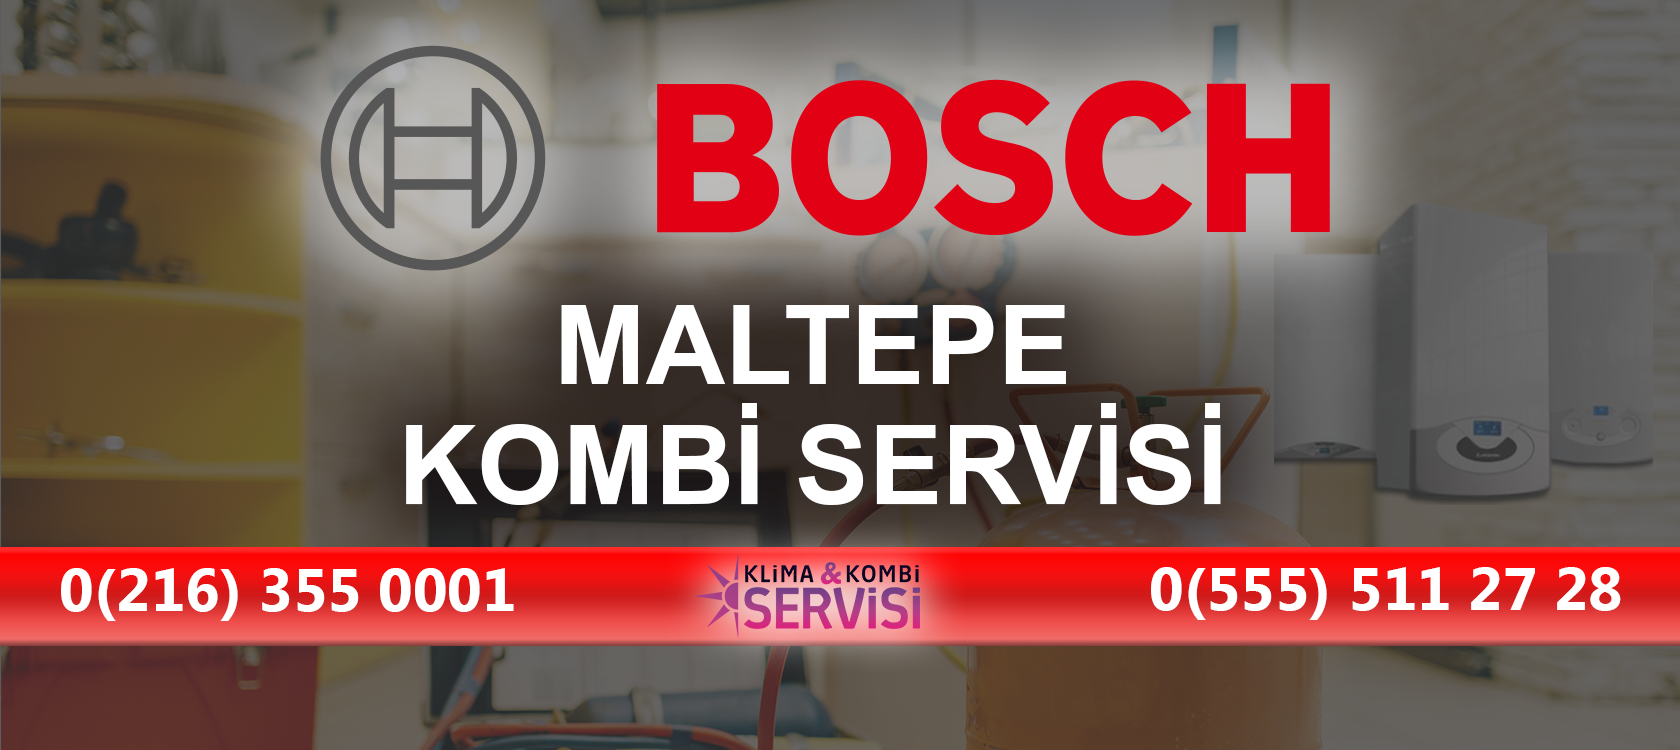 Maltepe Bosch Kombi Servisi